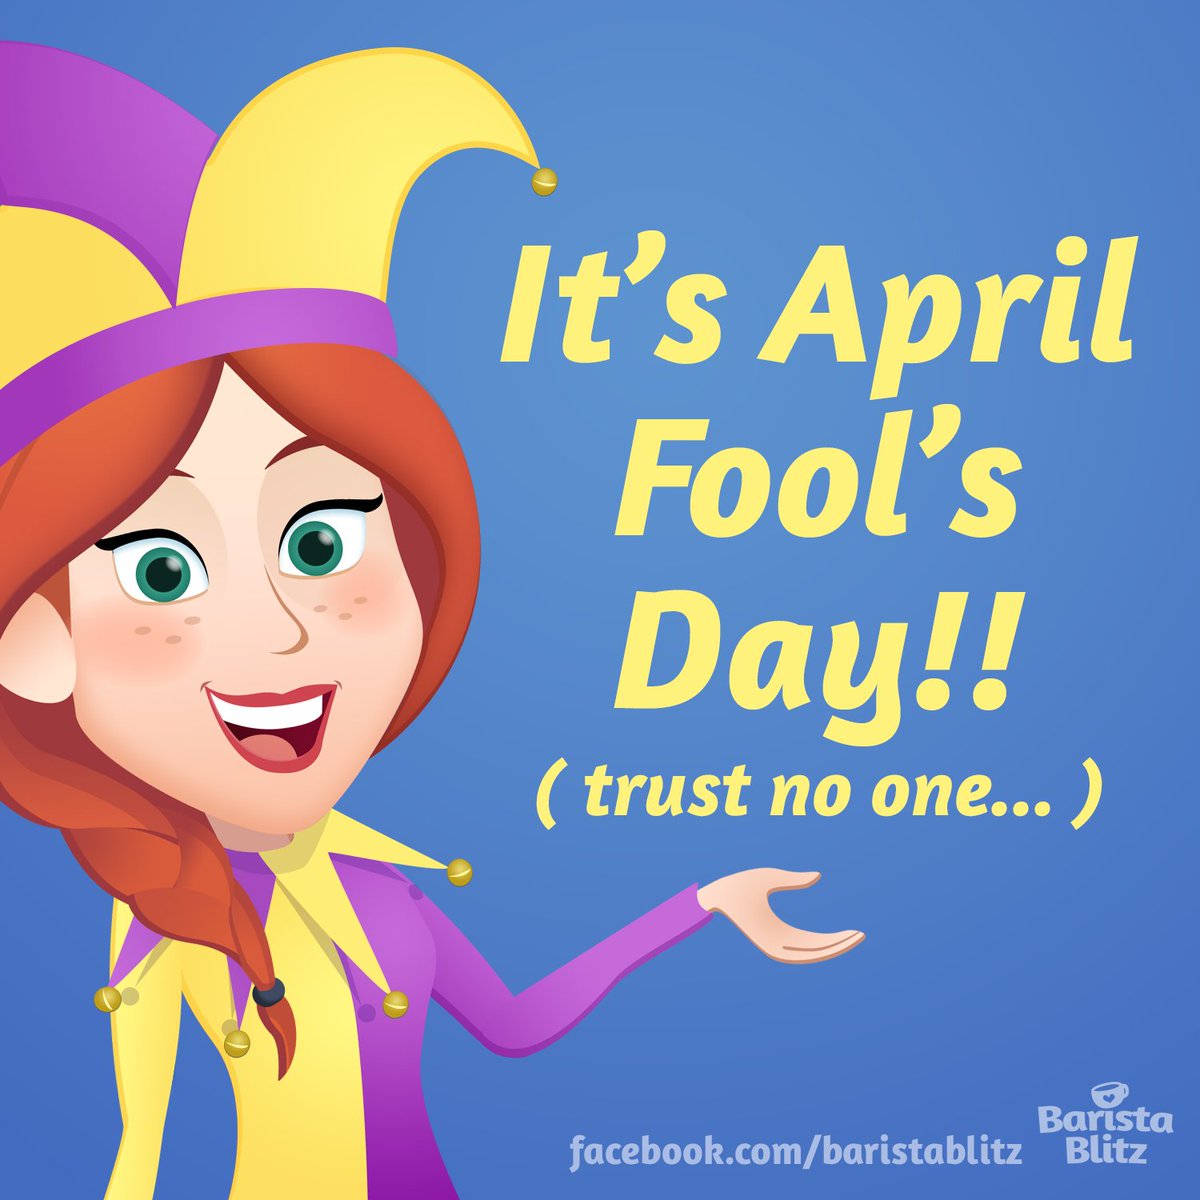 Happy fools day. День смеха на английском. April Fool's Day. Happy April Fool's Day открытки. Английские праздники день смеха.